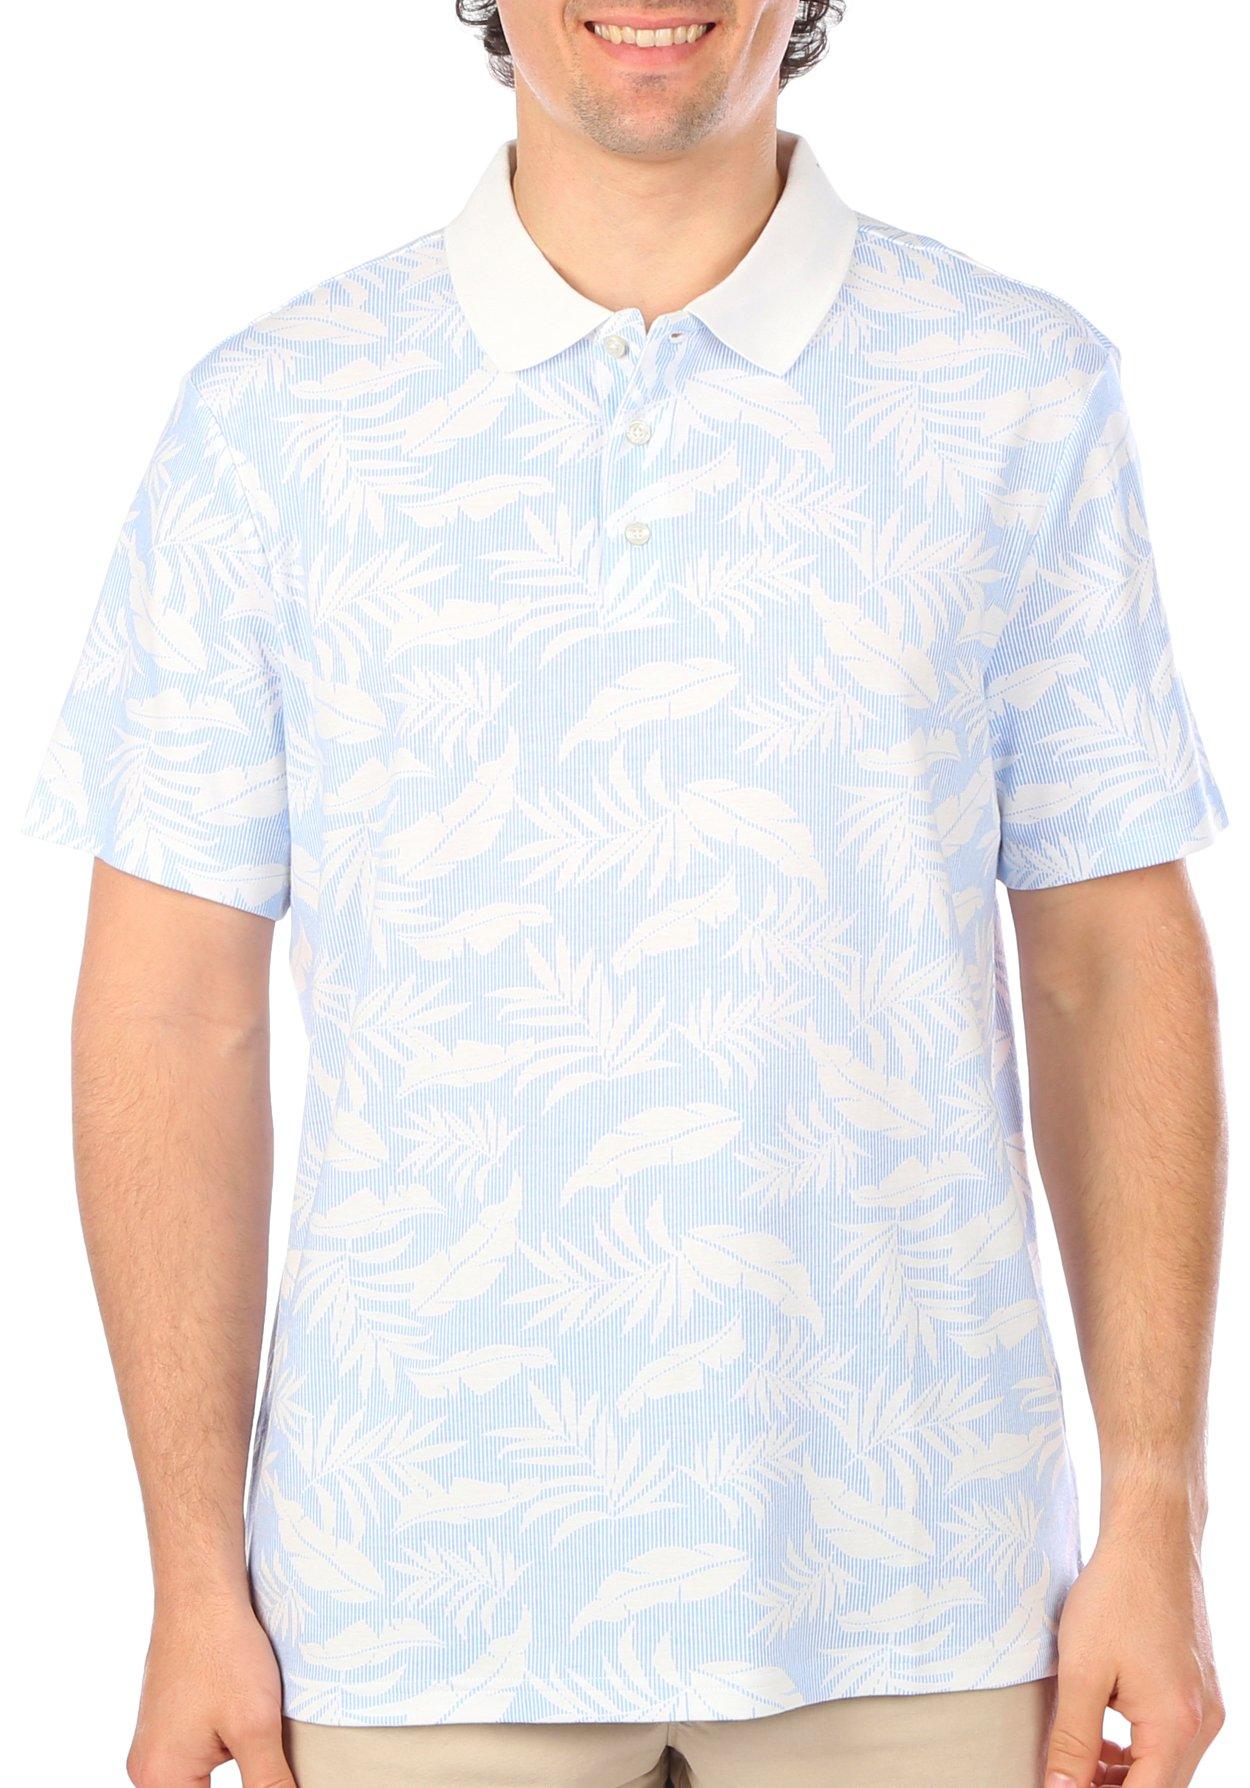 Mens Tropical Short Sleeve T- Shirt